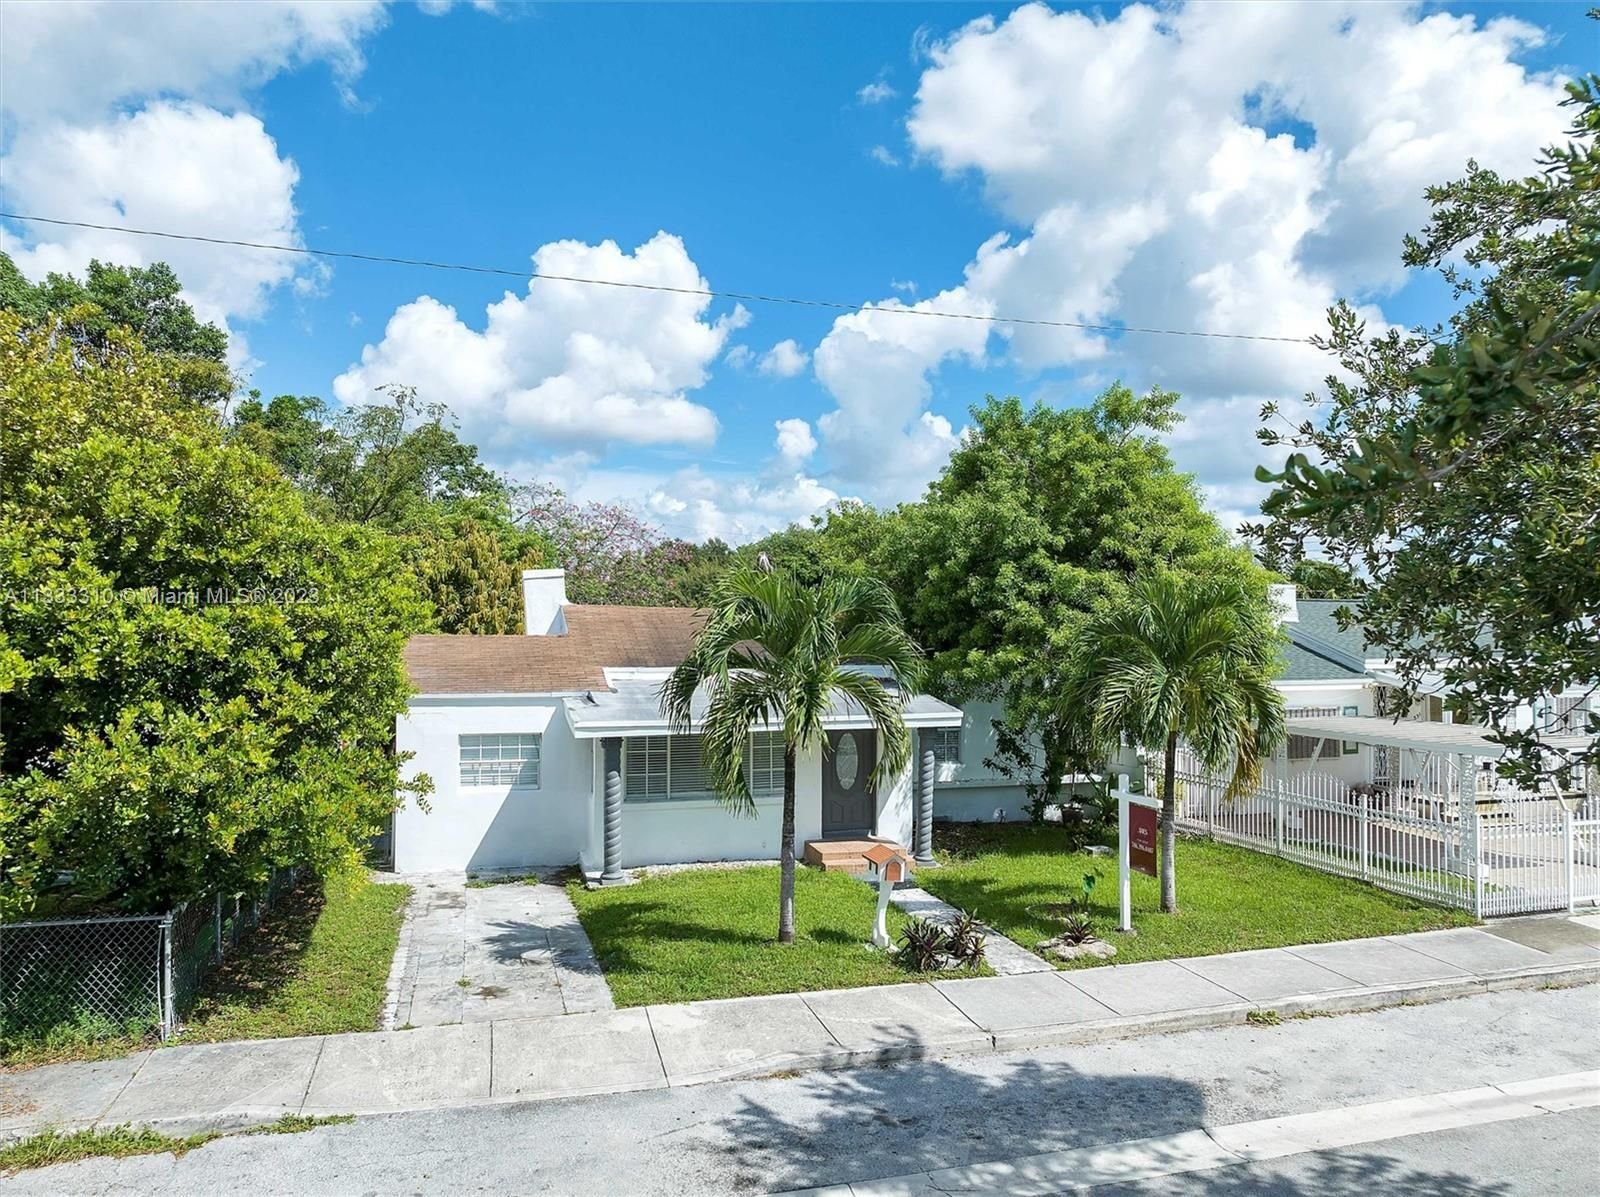 Real estate property located at 541 49th St, Miami-Dade County, Miami, FL